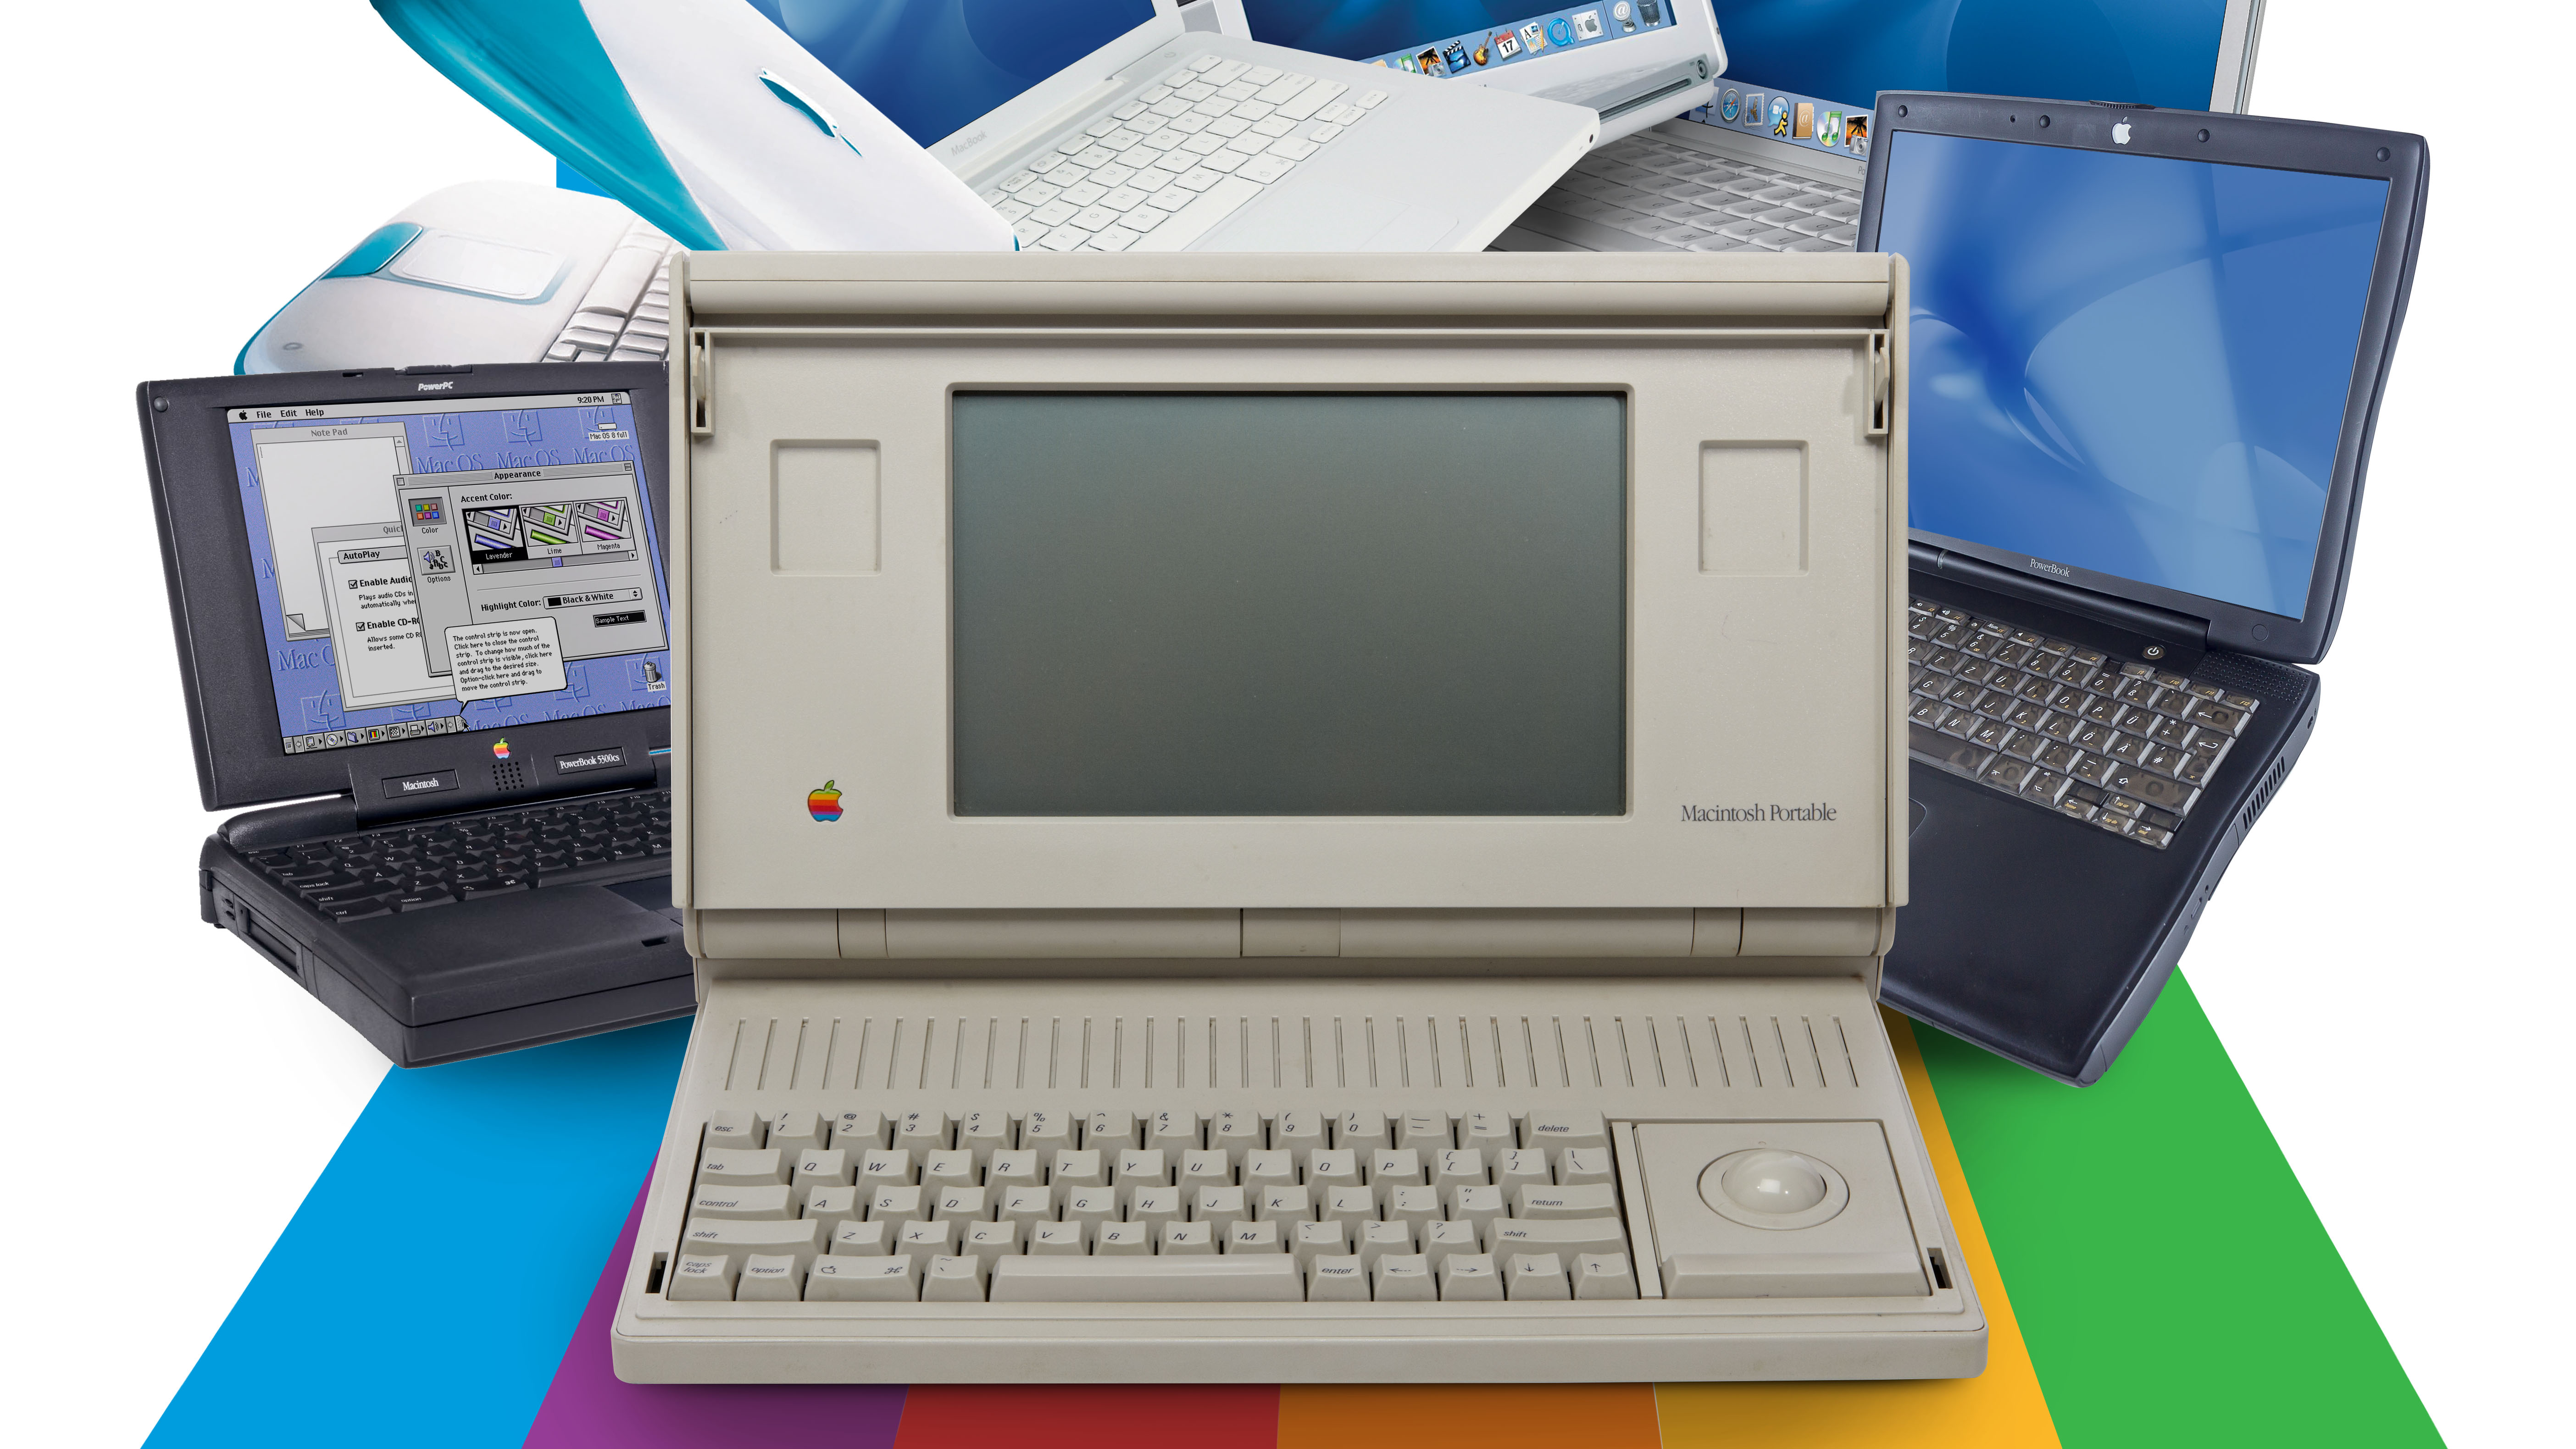 Apple Laptop Macintosh Portable Computer Debut 1989